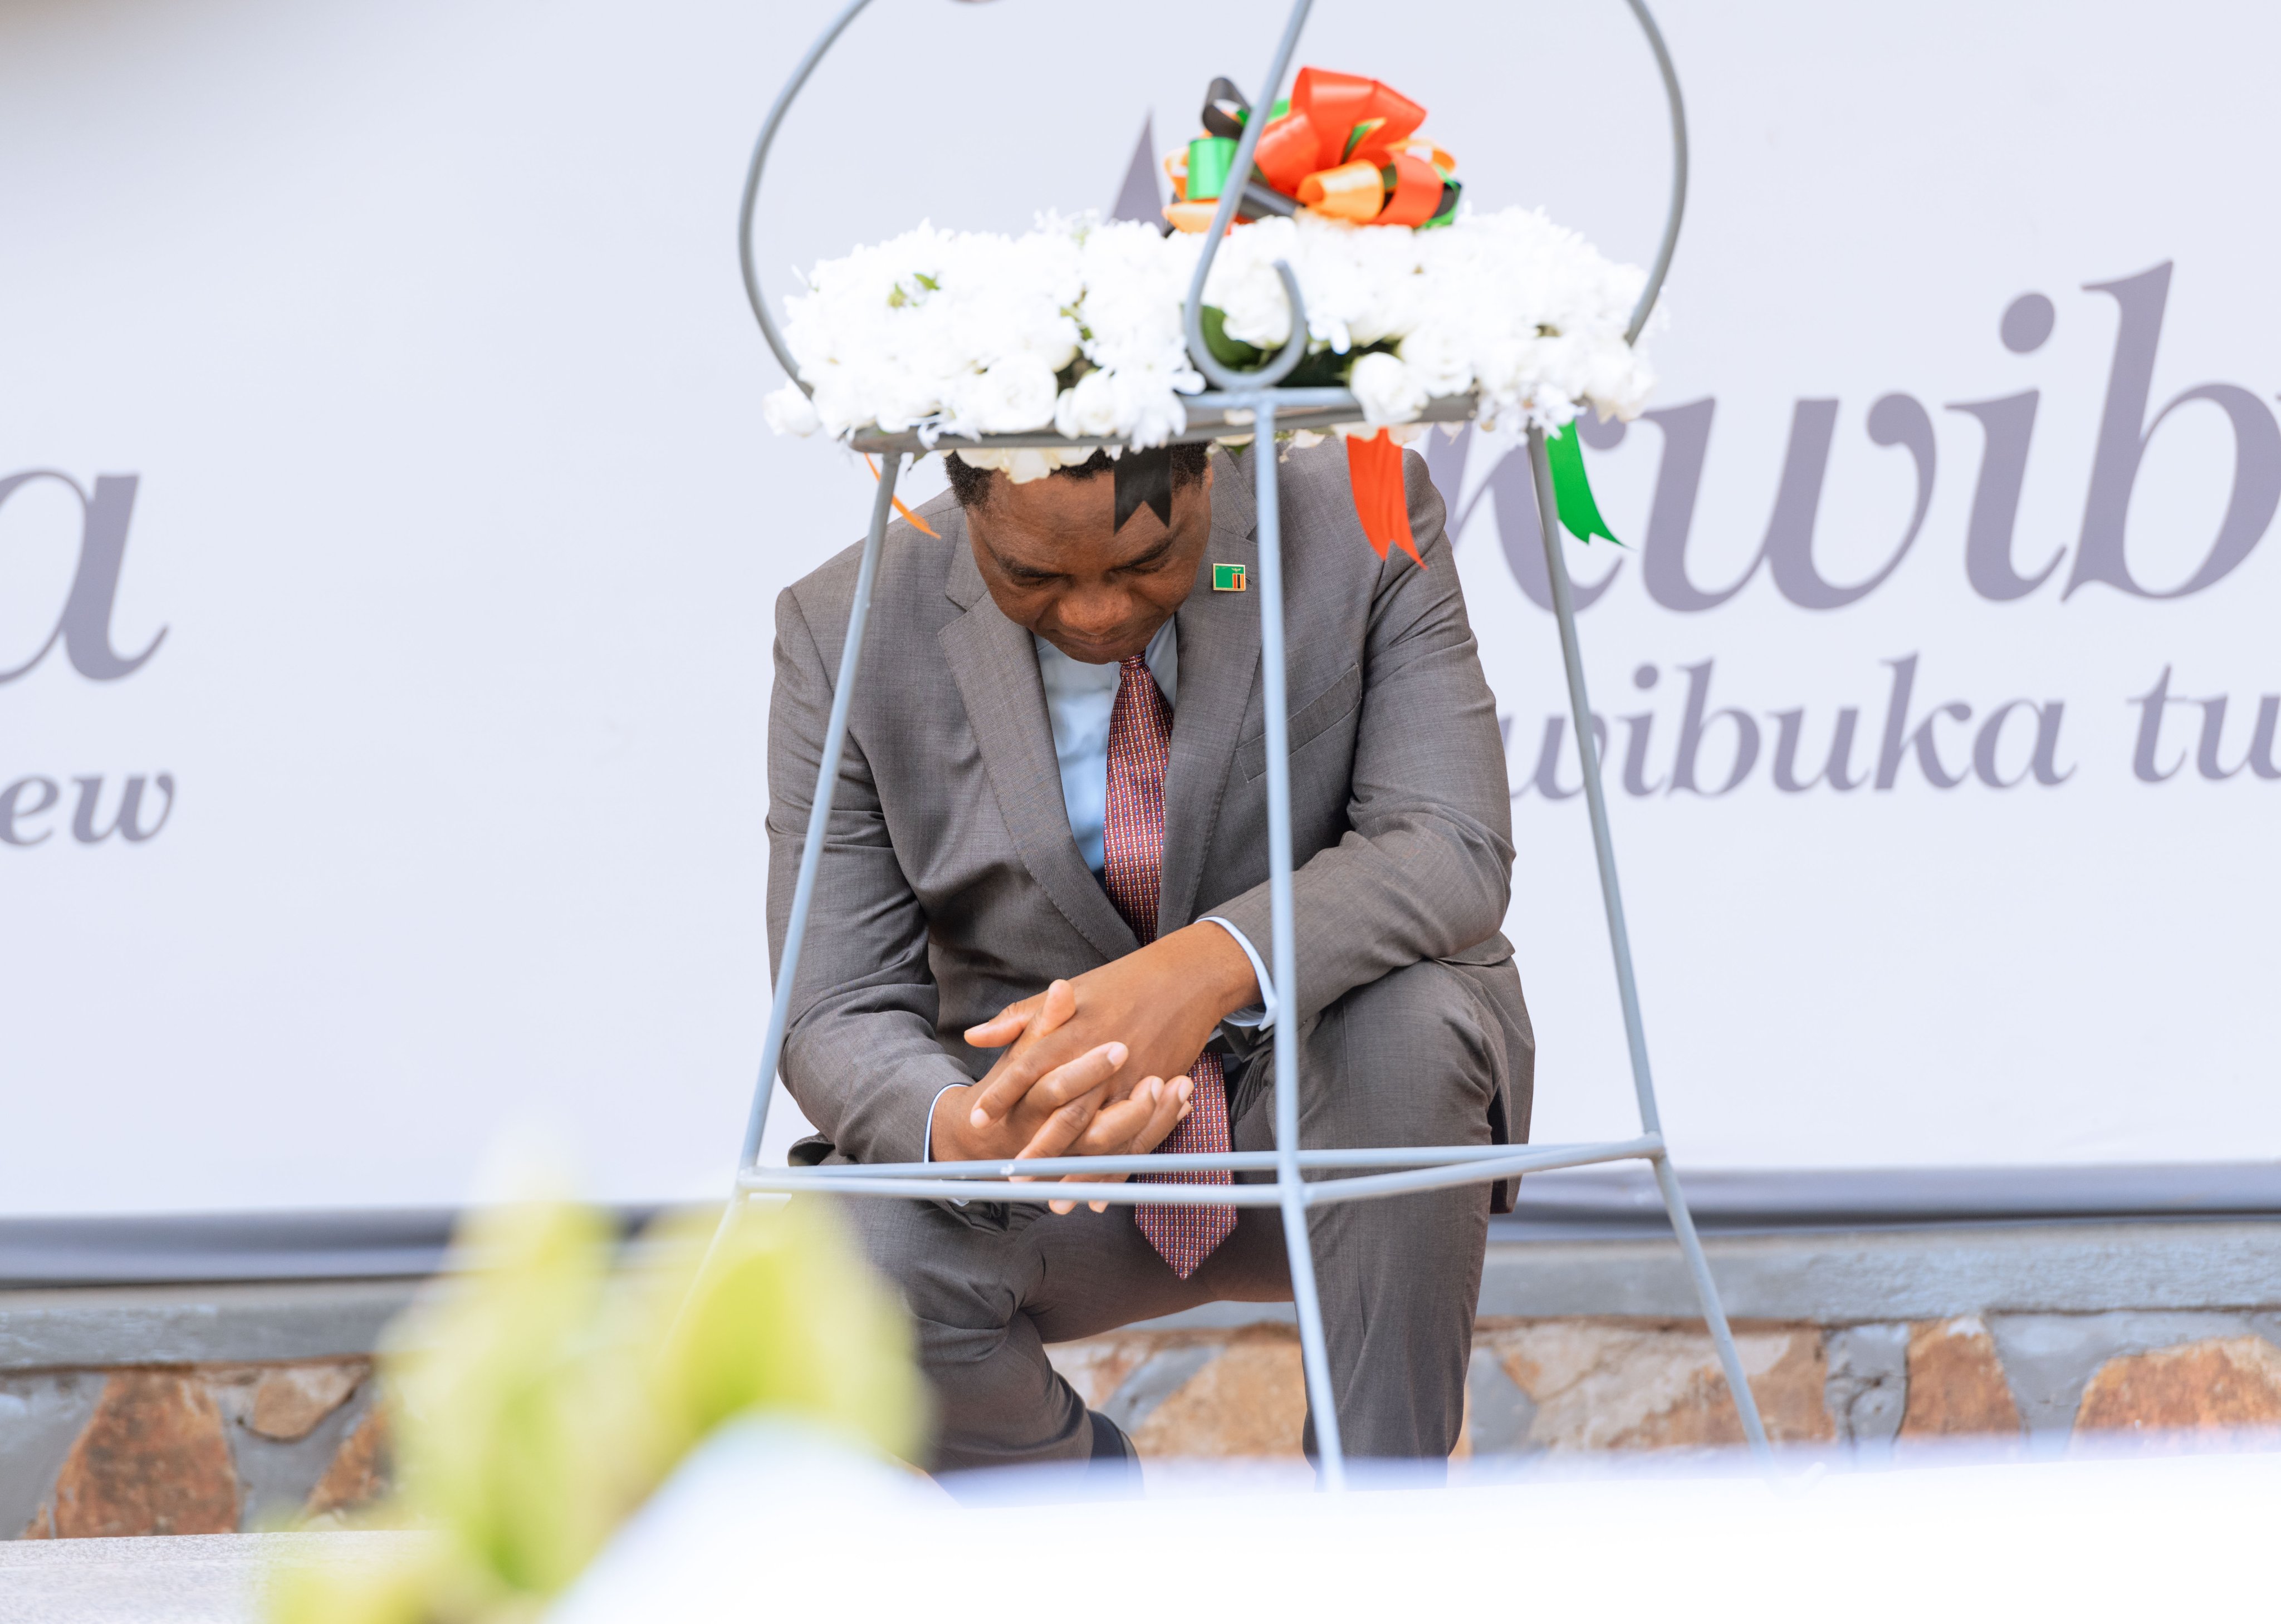 Perezida wa Zambia Hakainde Hichilema yasuye Urwibutso rwa Jenoside rwa  Kigali